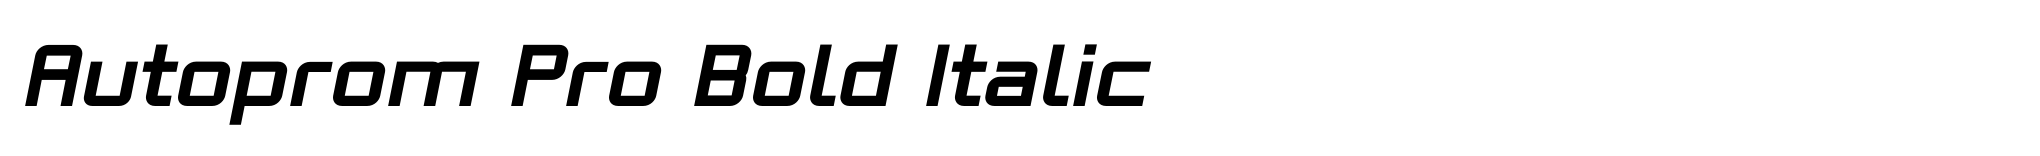 Autoprom Pro Bold Italic image